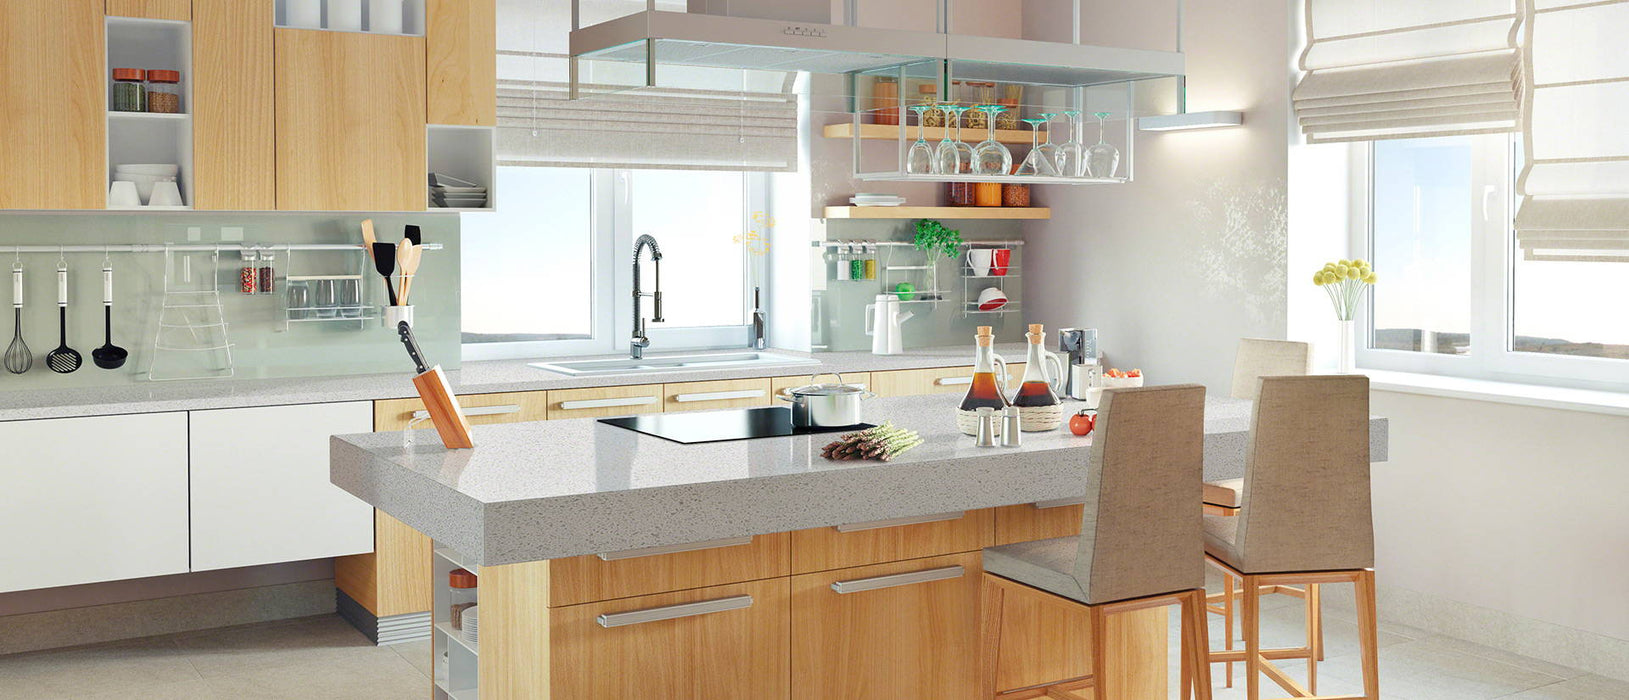 Meridian gray quartz countertop kitchen scene